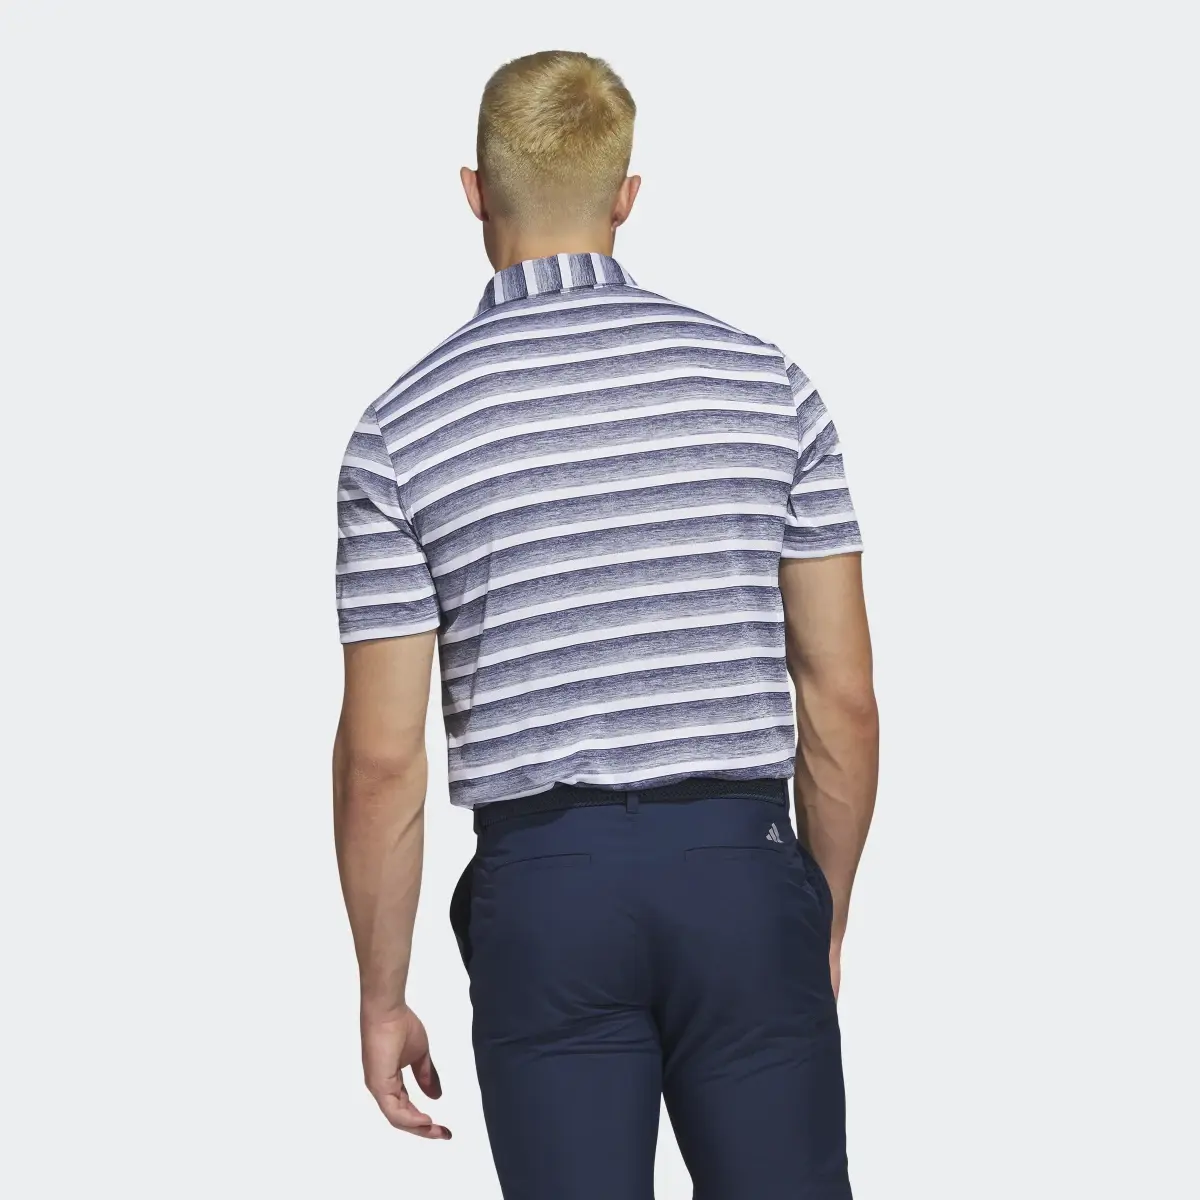 Adidas Two-Color Striped Golf Polo Shirt. 3